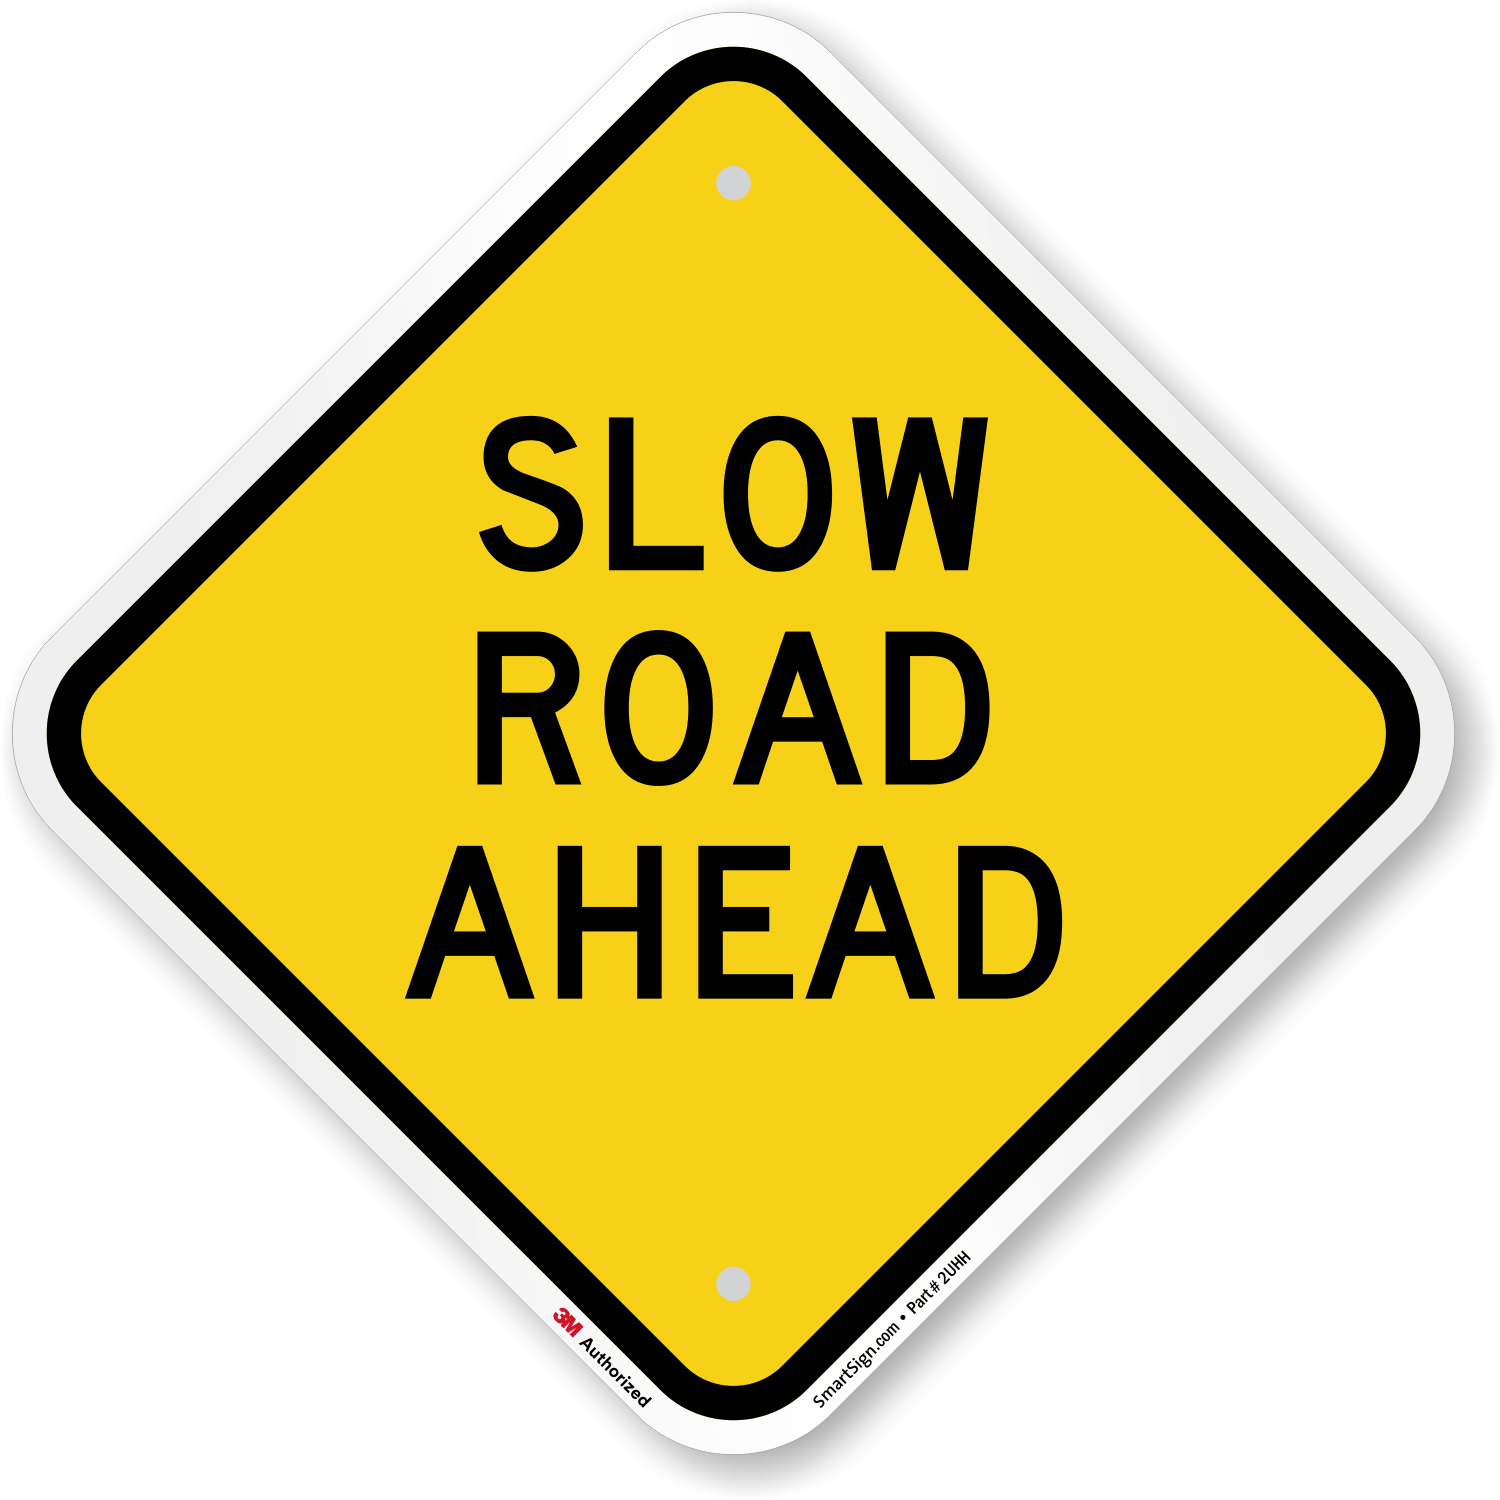 Slow road ahead